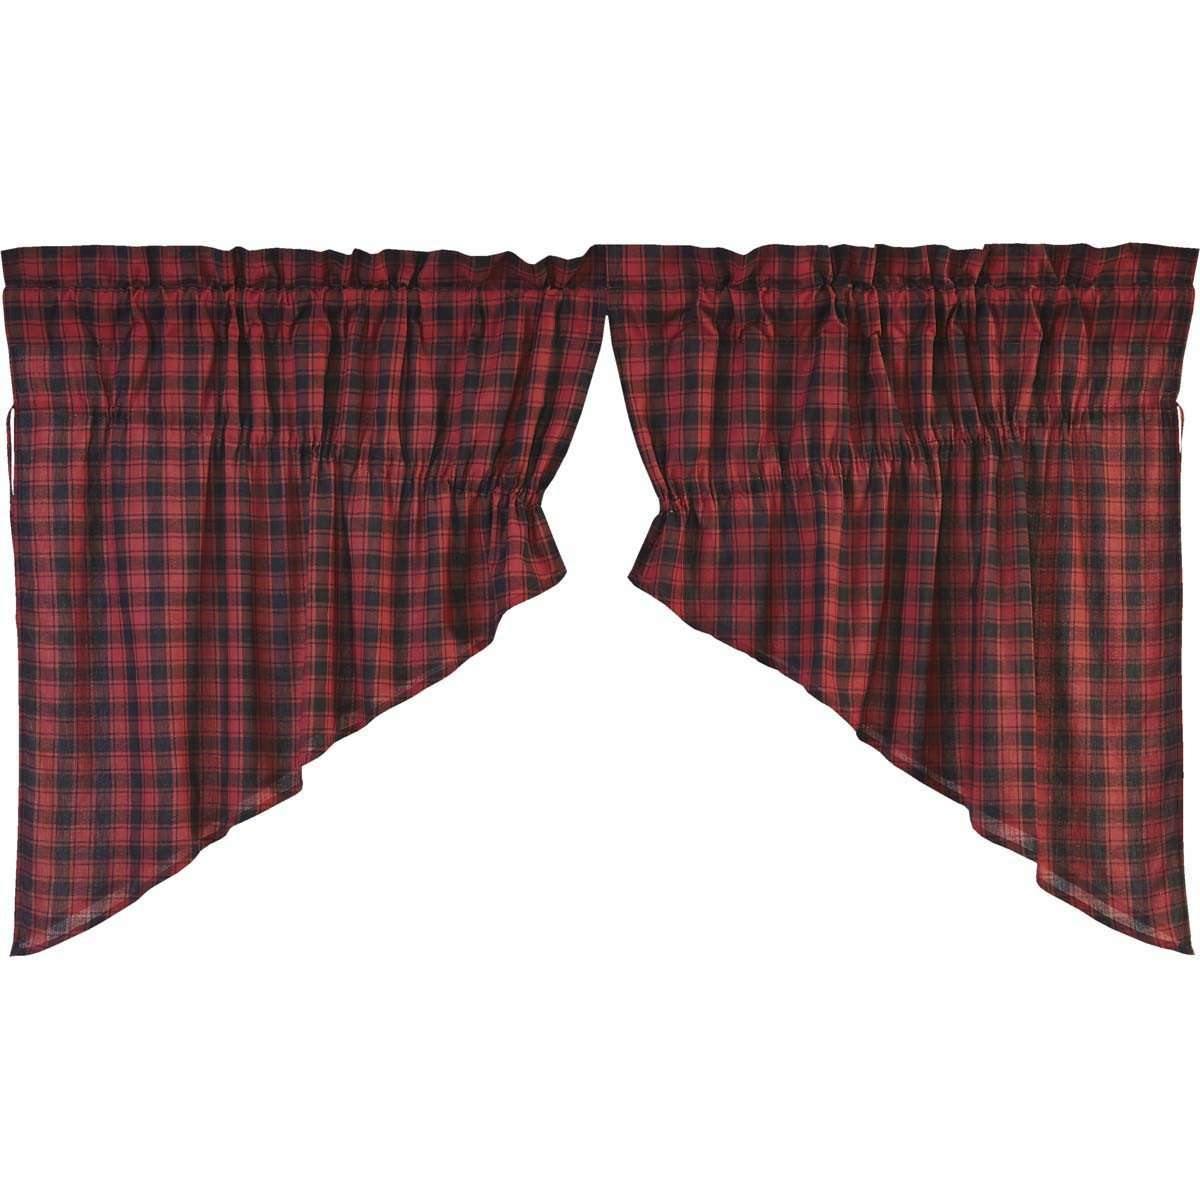 Cumberland Prairie Swag Curtain Set of 2 36x36x18 VHC Brands - The Fox Decor